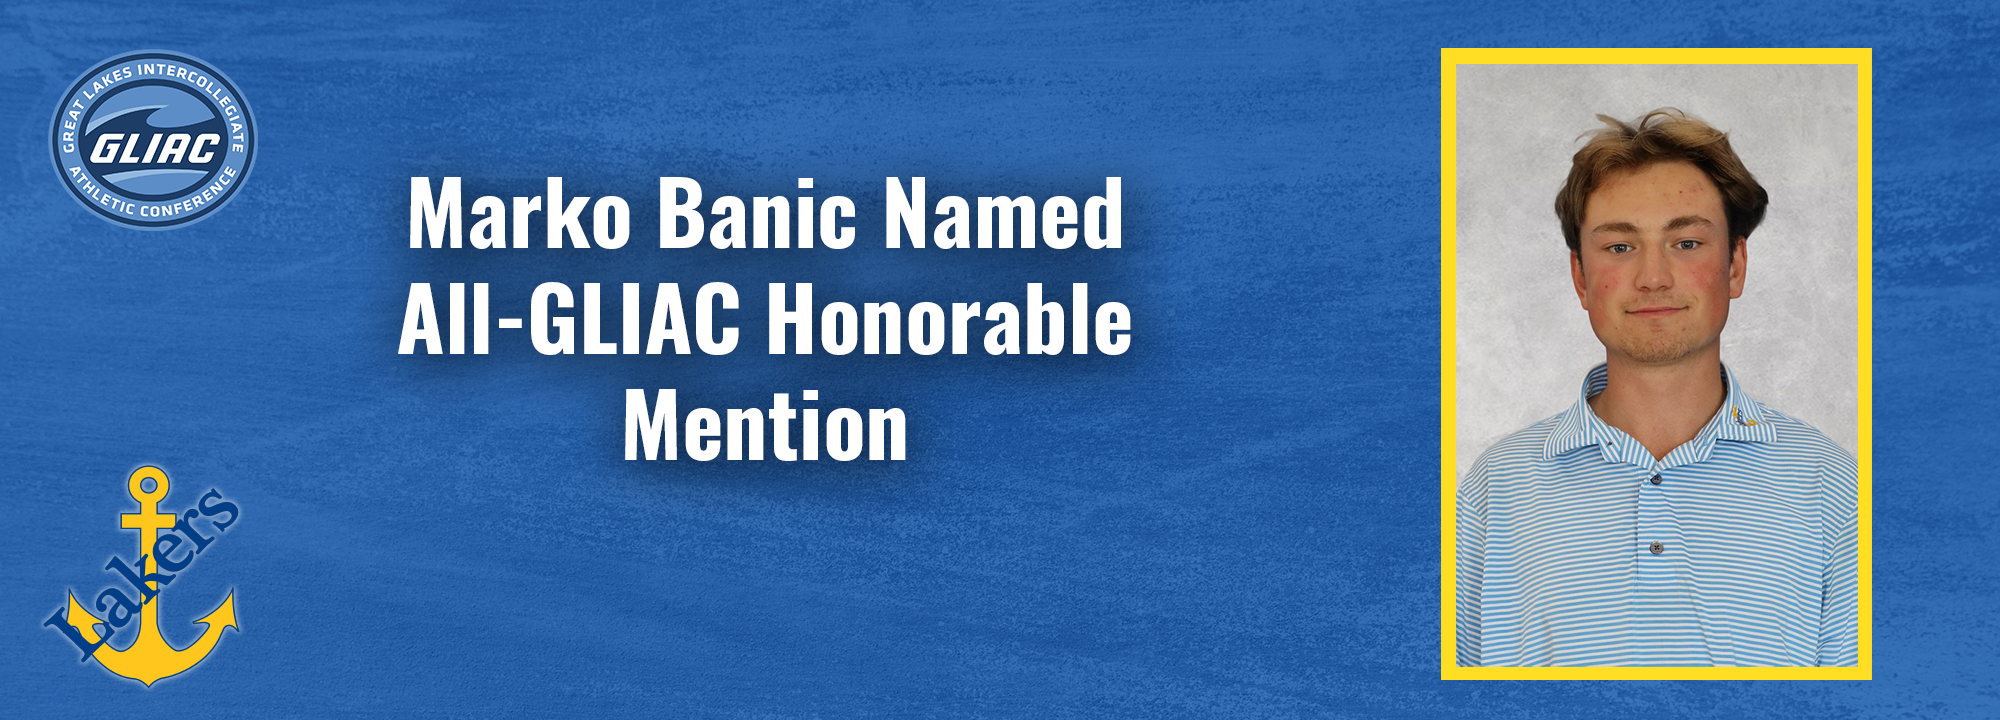 Marko Banic Named All-GLIAC